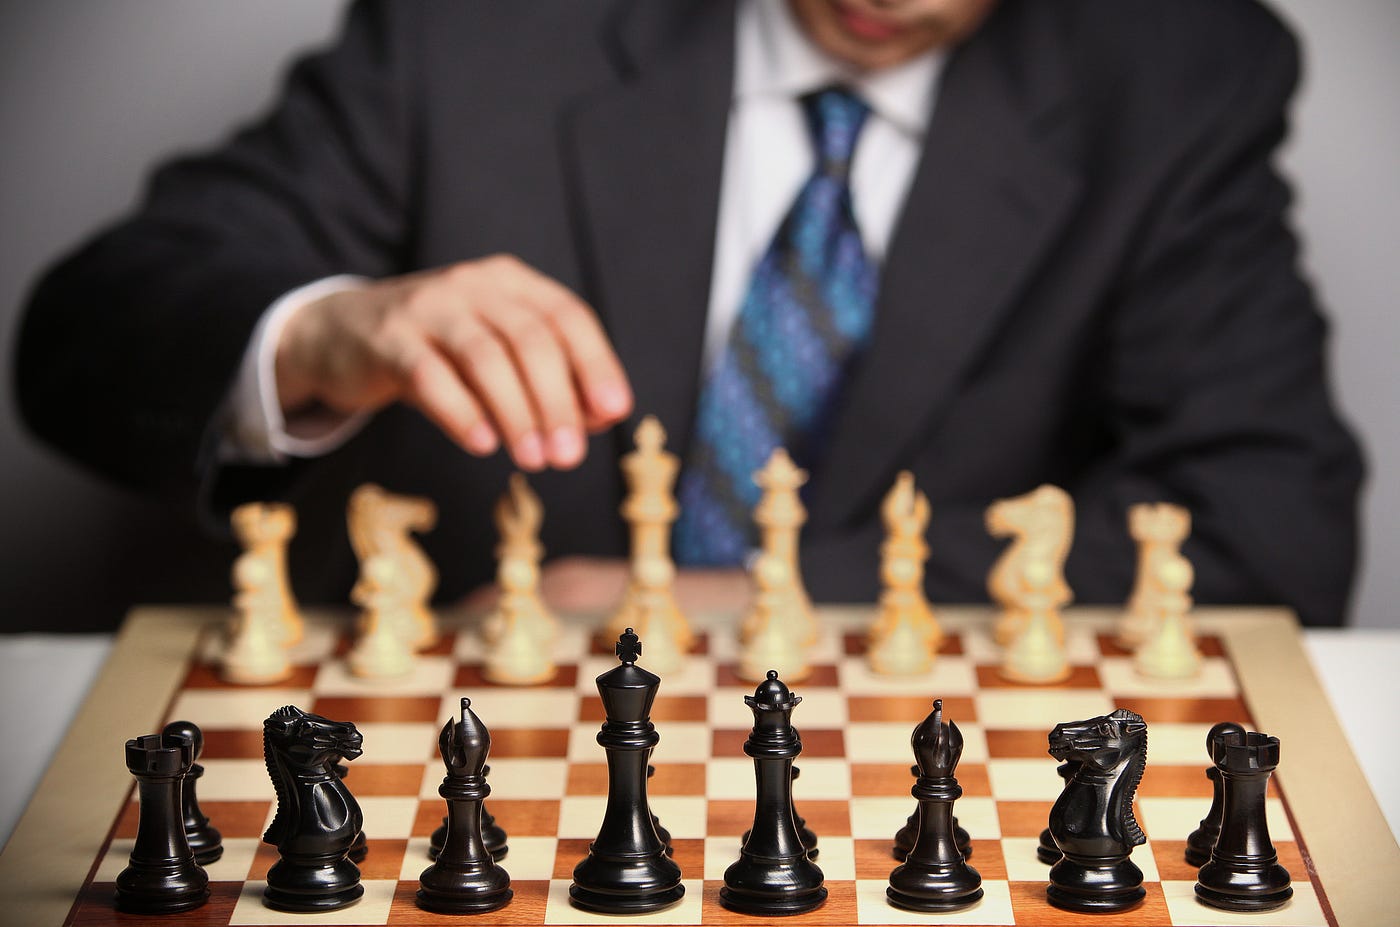 GothamChess: How Levy Rozman Became The Internet's Chess Teacher : r/ GothamChess